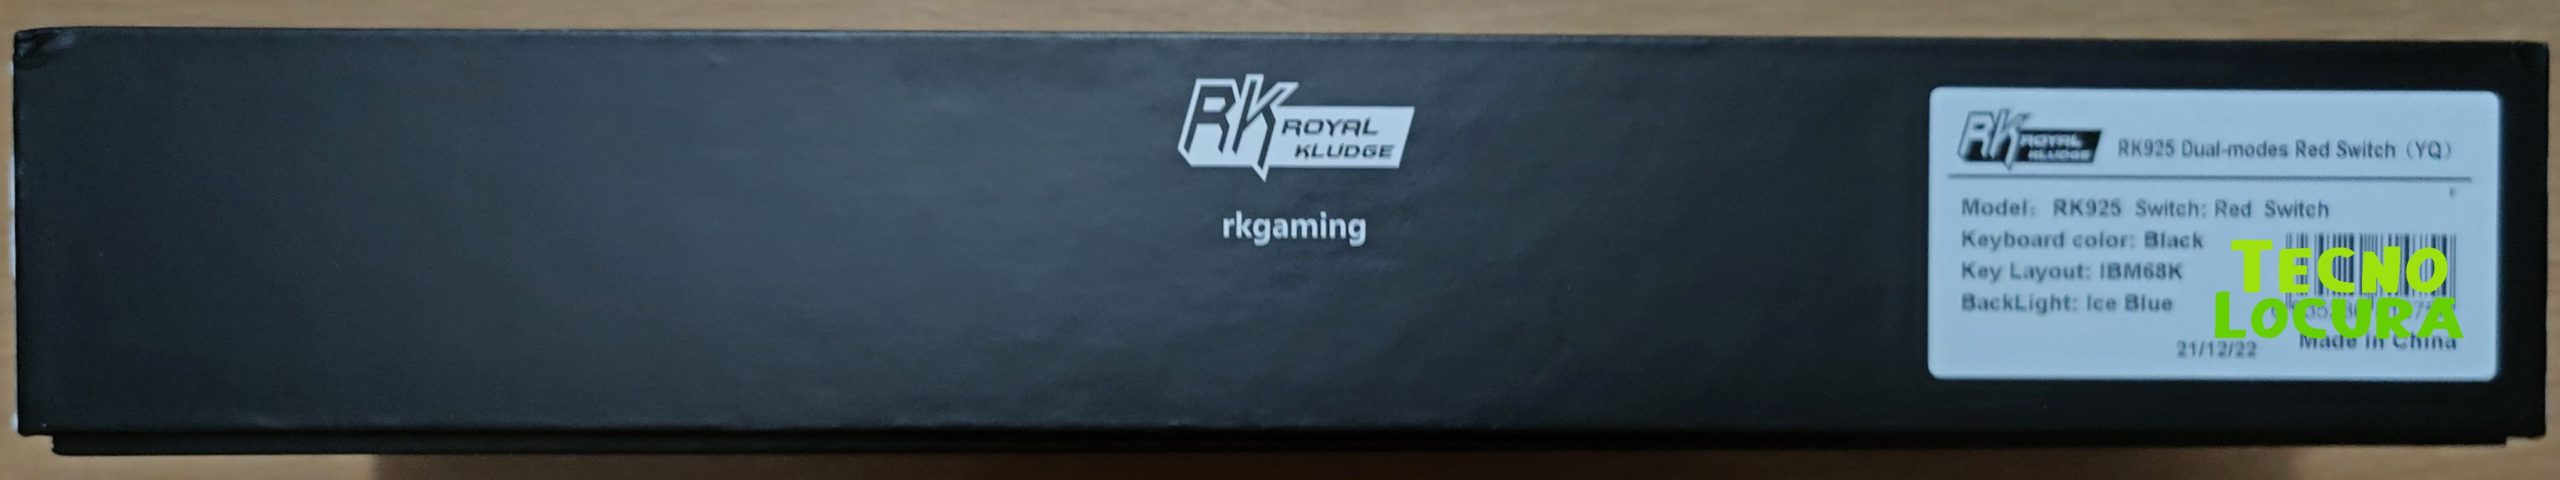 ROYAL-KLUDGE-RK925-TECNOLOCURA